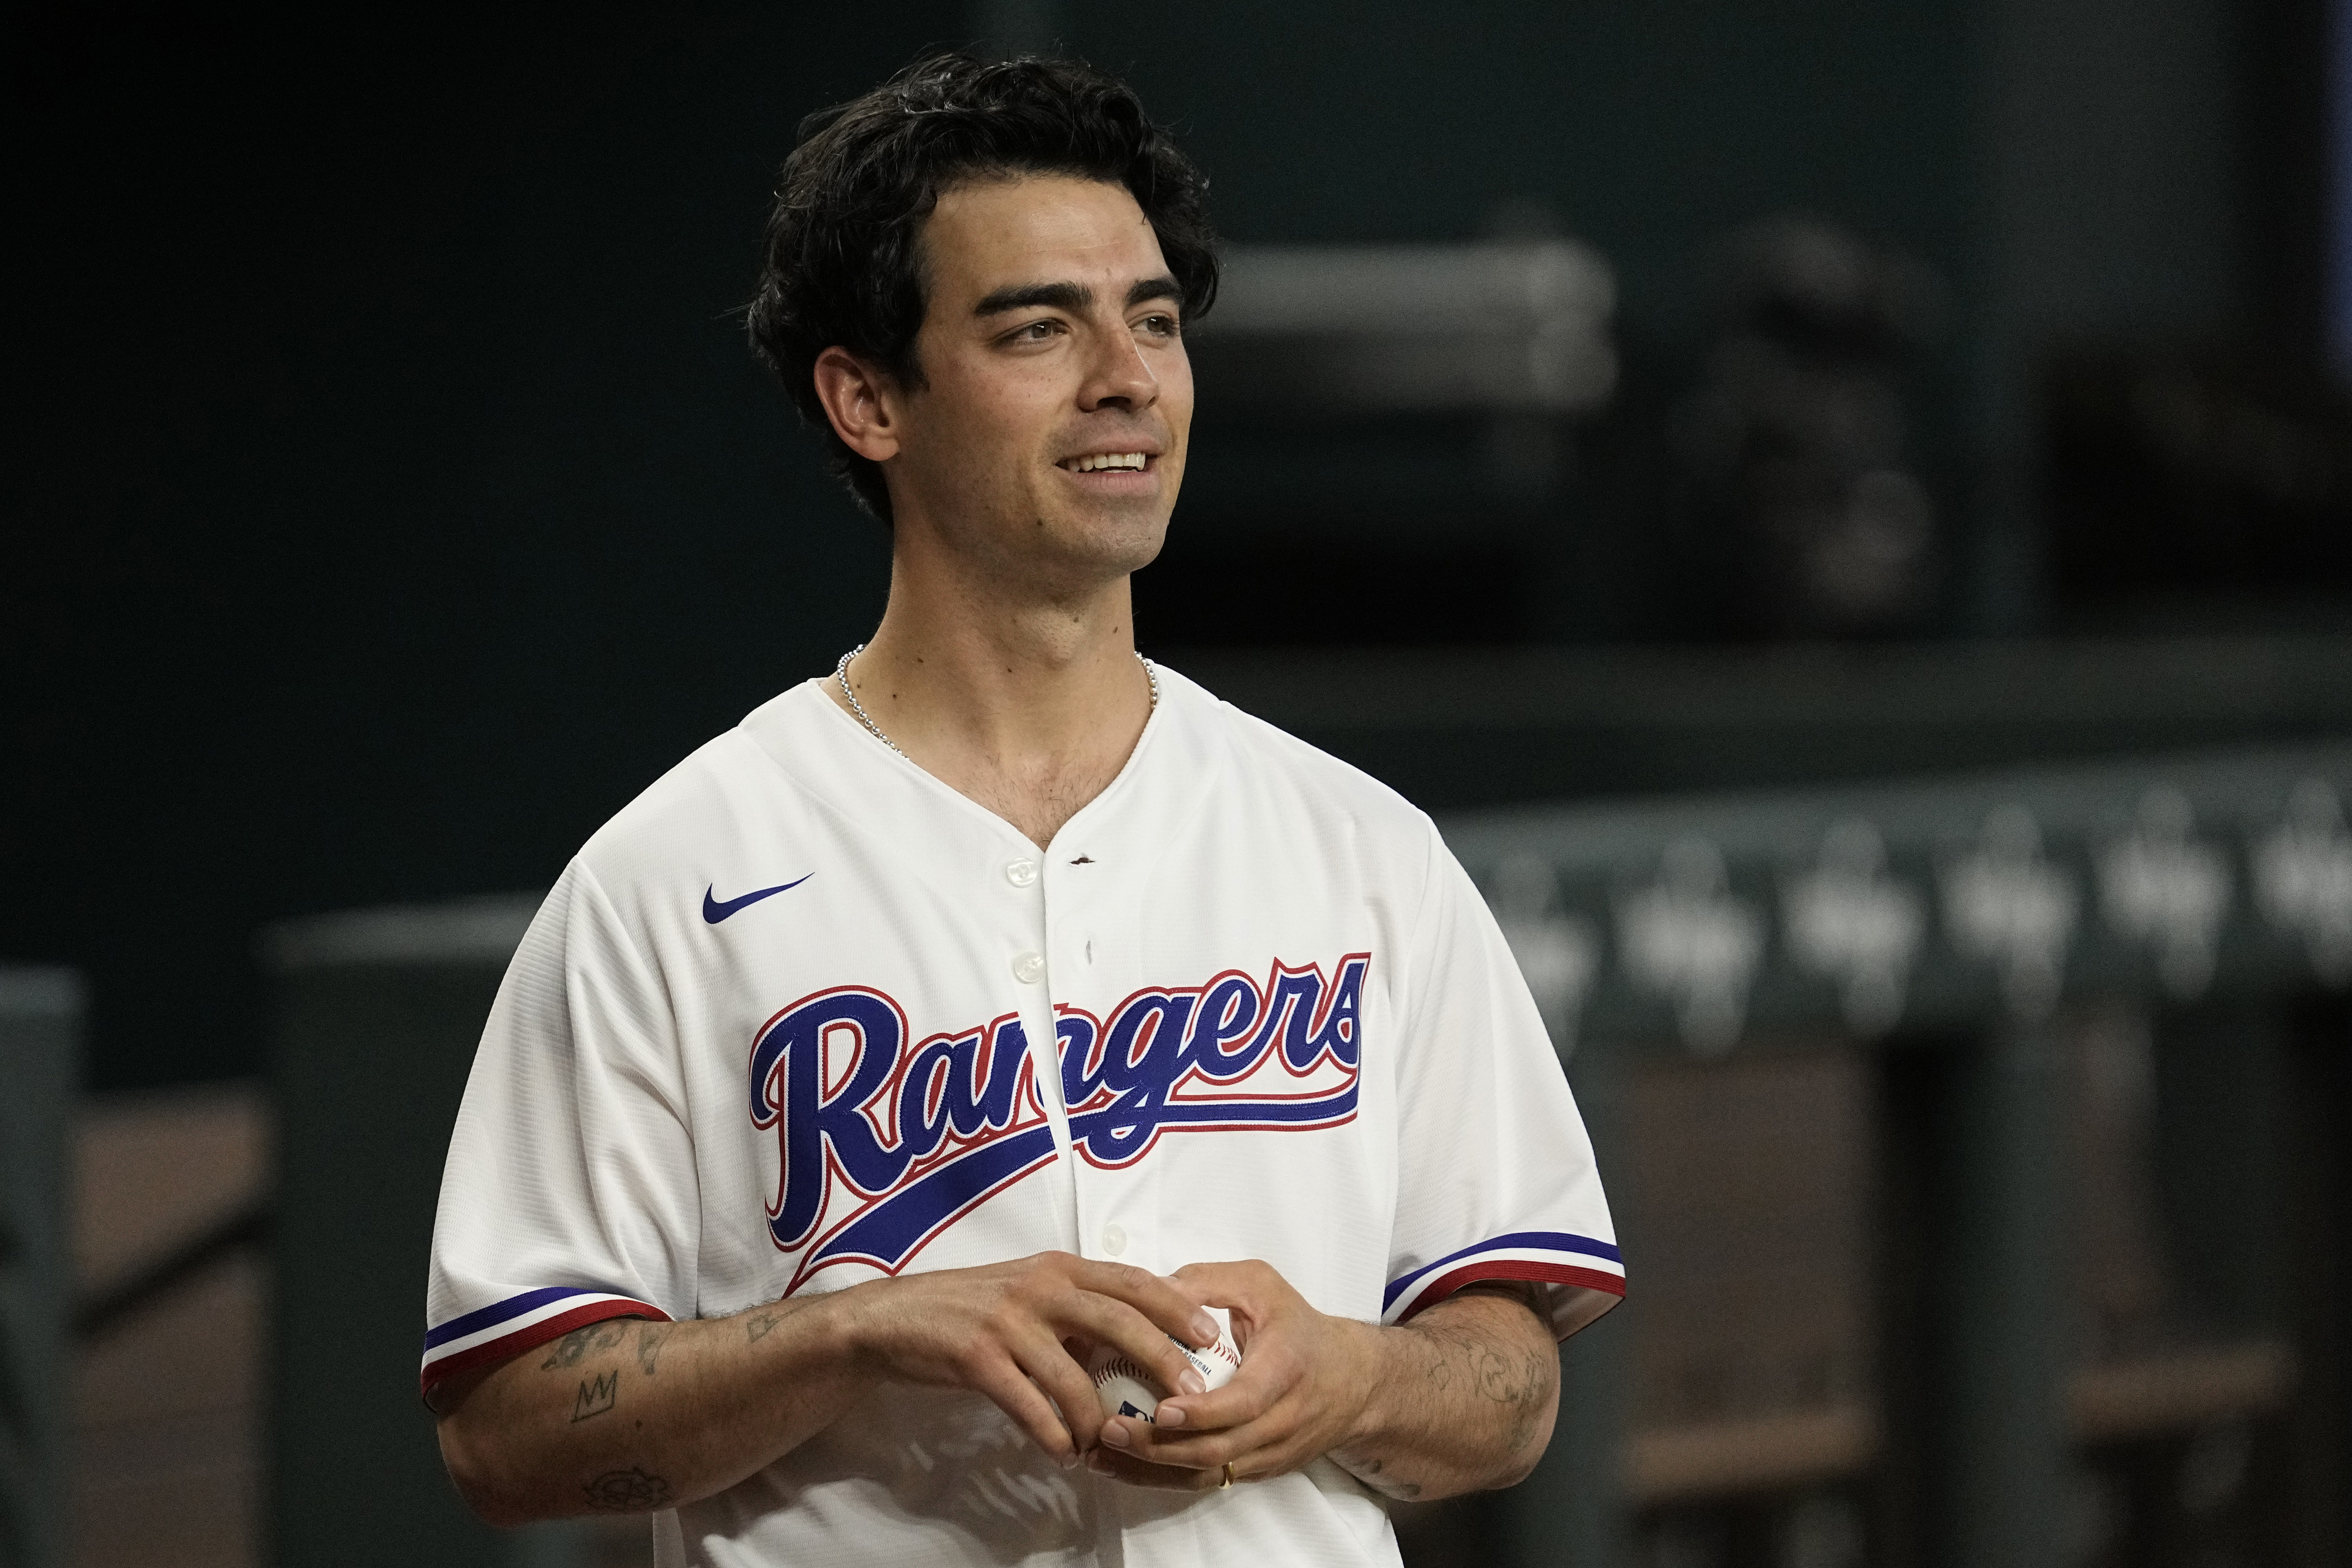 Close-up of Joe in a baseball jersey and holding a baseball